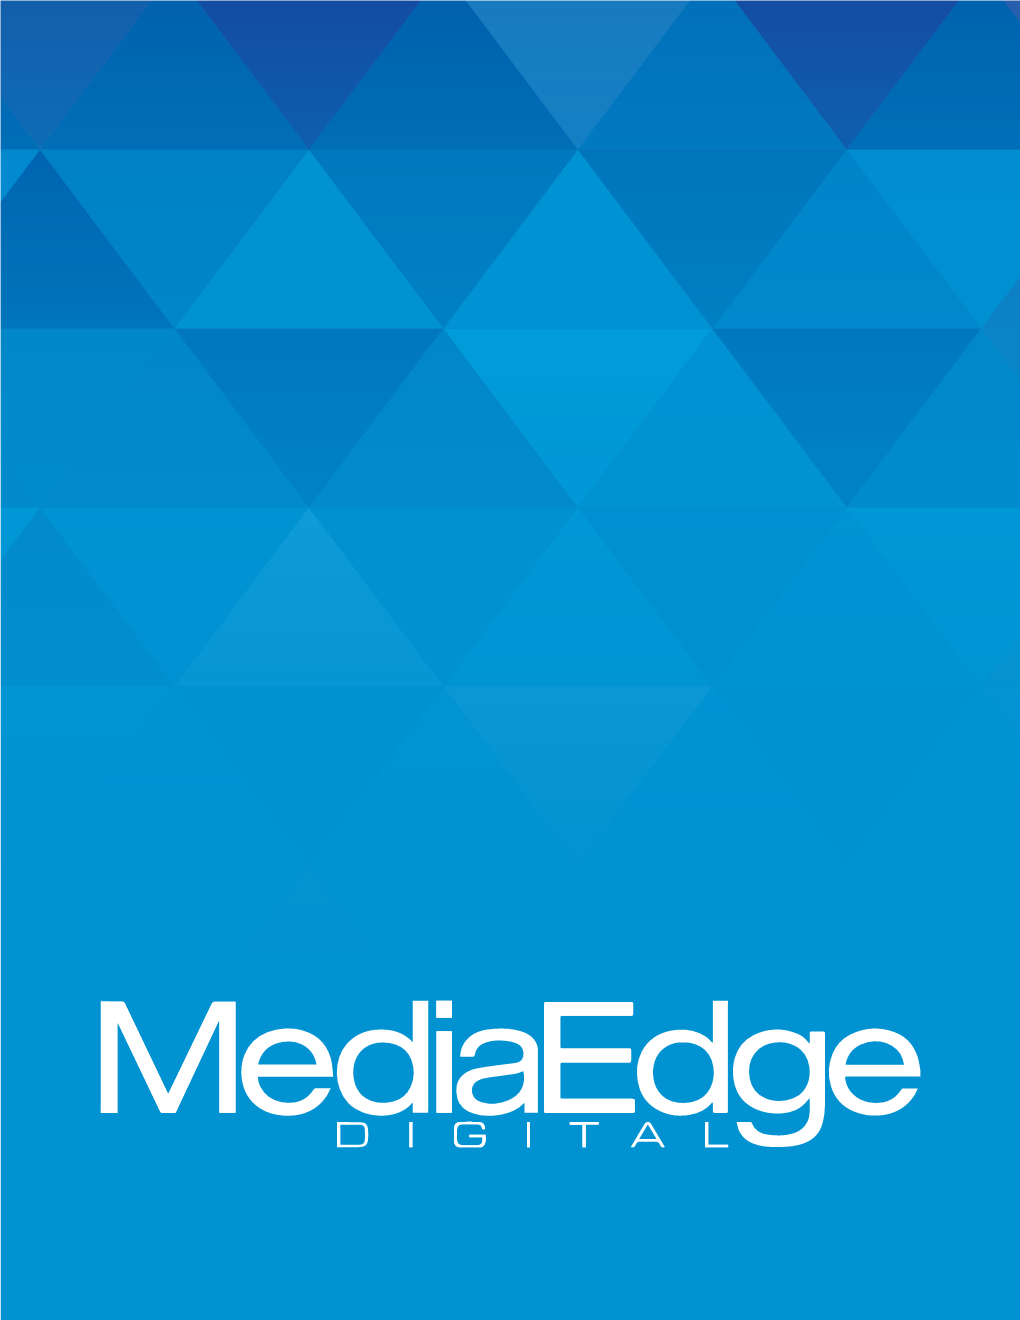 Mediaedge Digital • Digital Media Publishing • 1 Providing Non-Dues Revenue to Associations Across North America Through Digital Media Solutions and Member Benefits